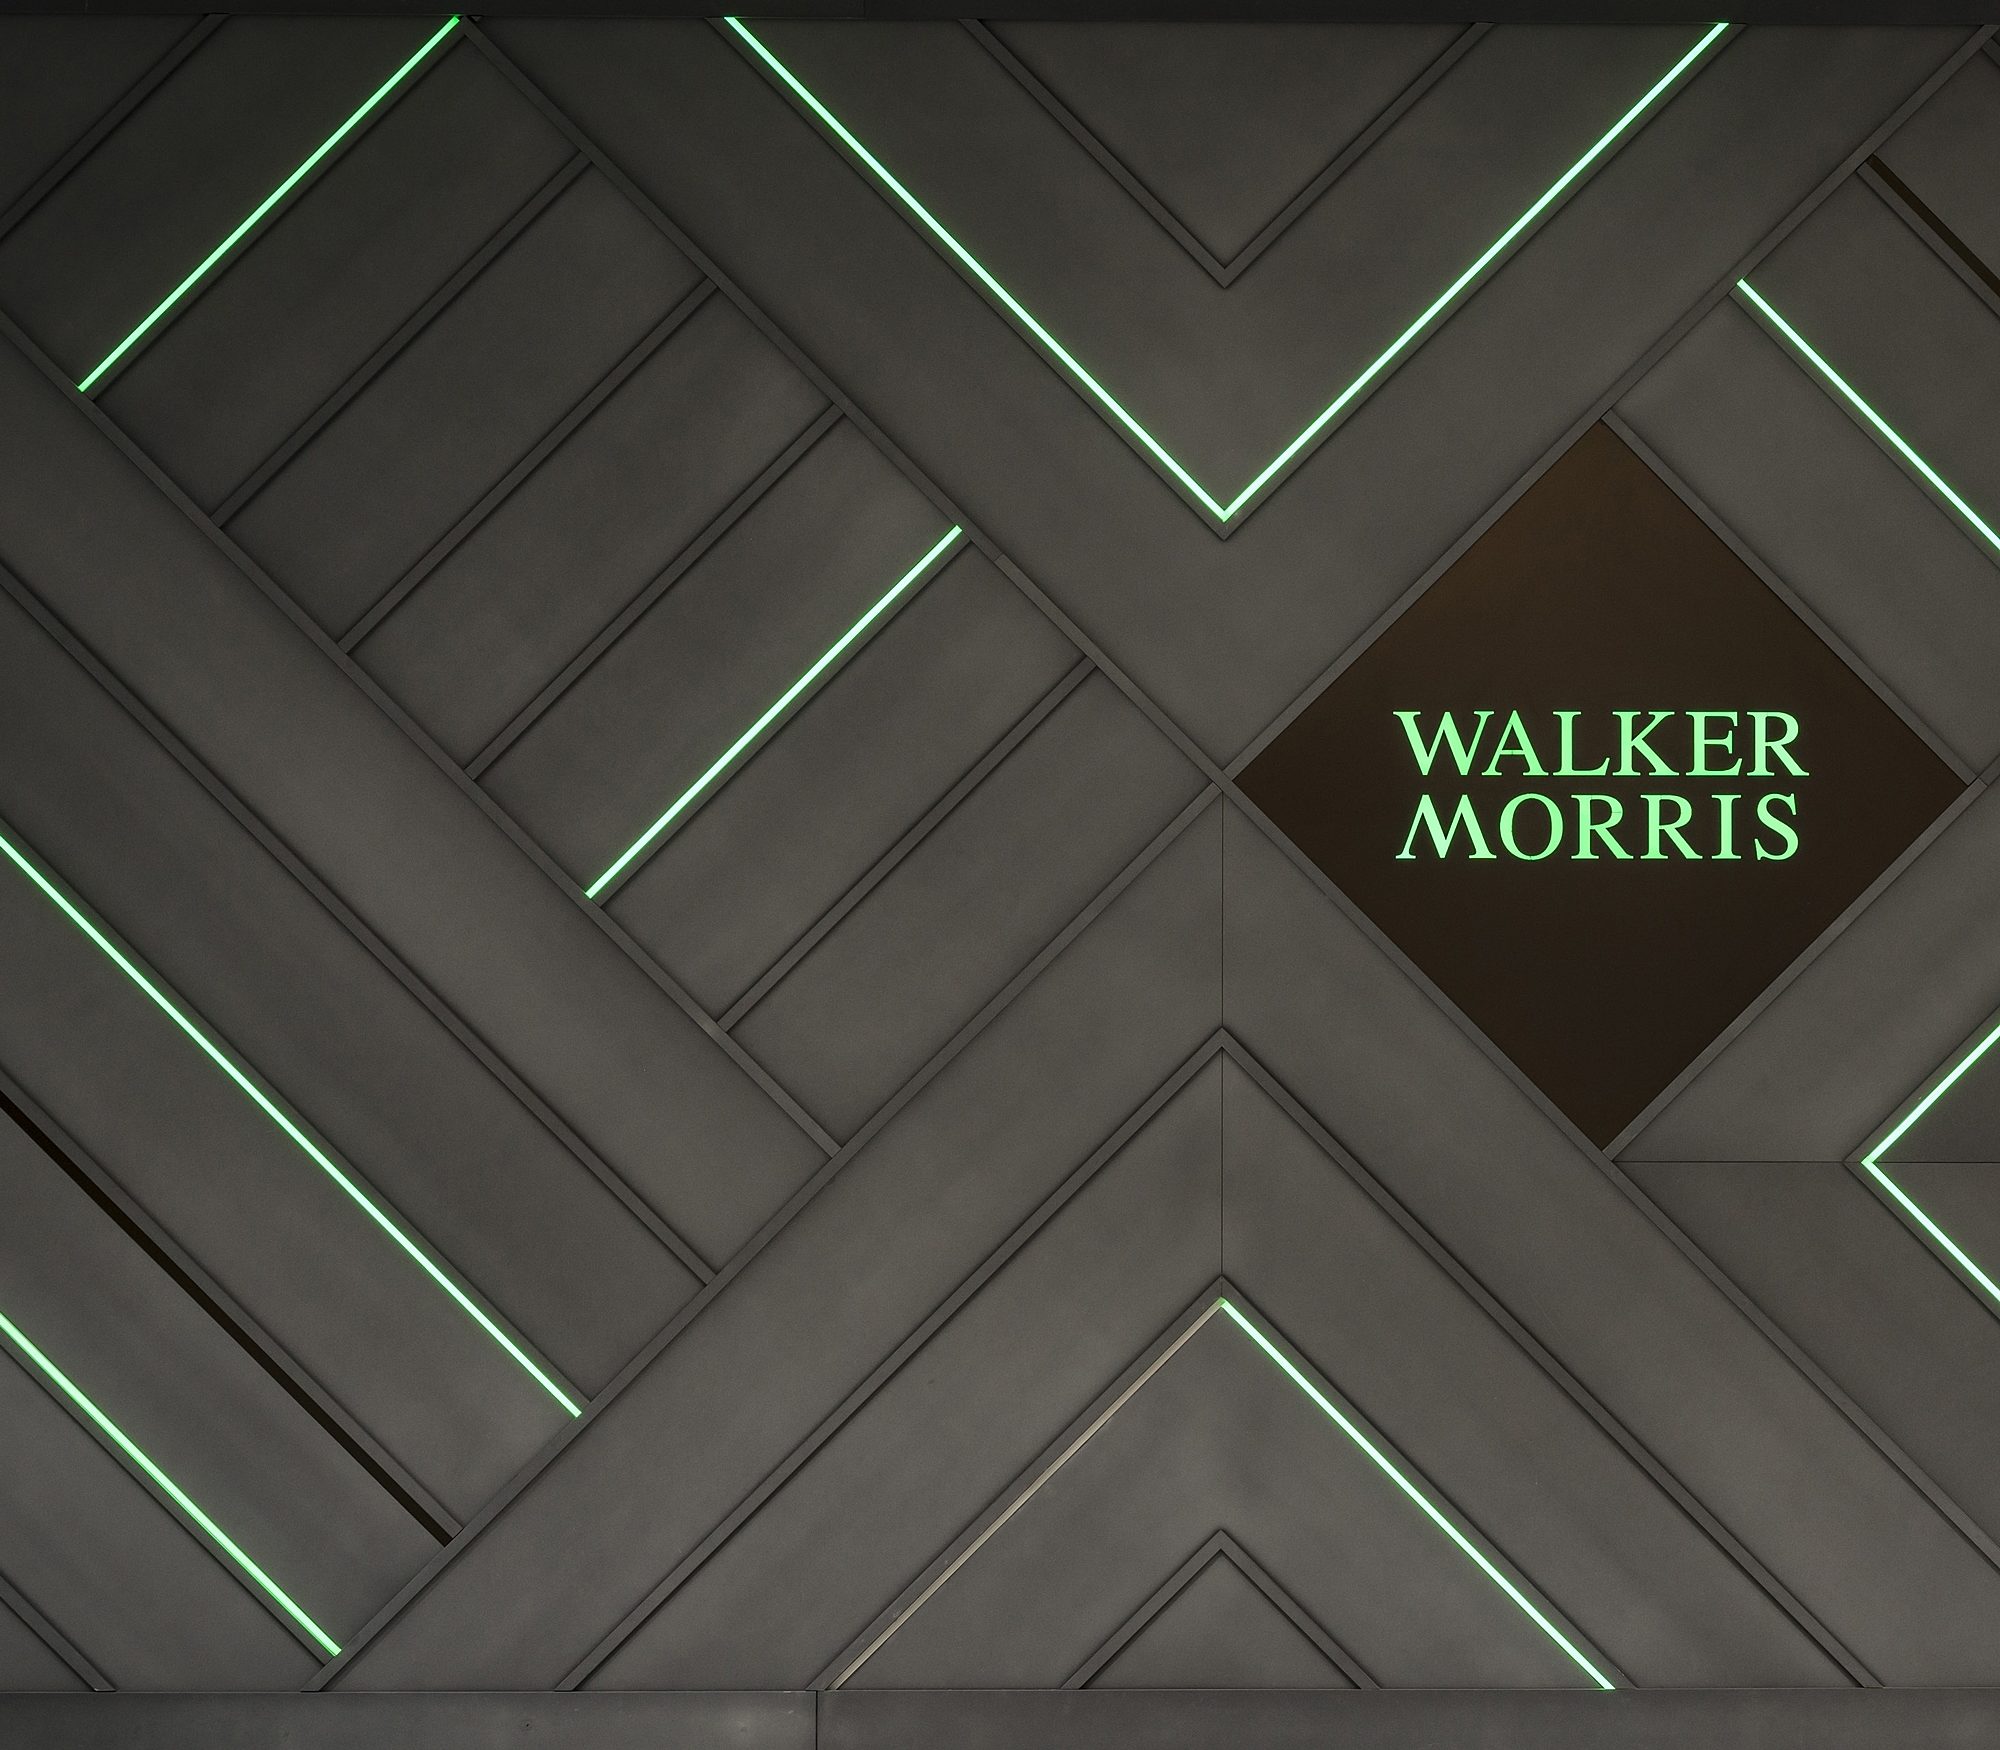 Walker morris detail wall